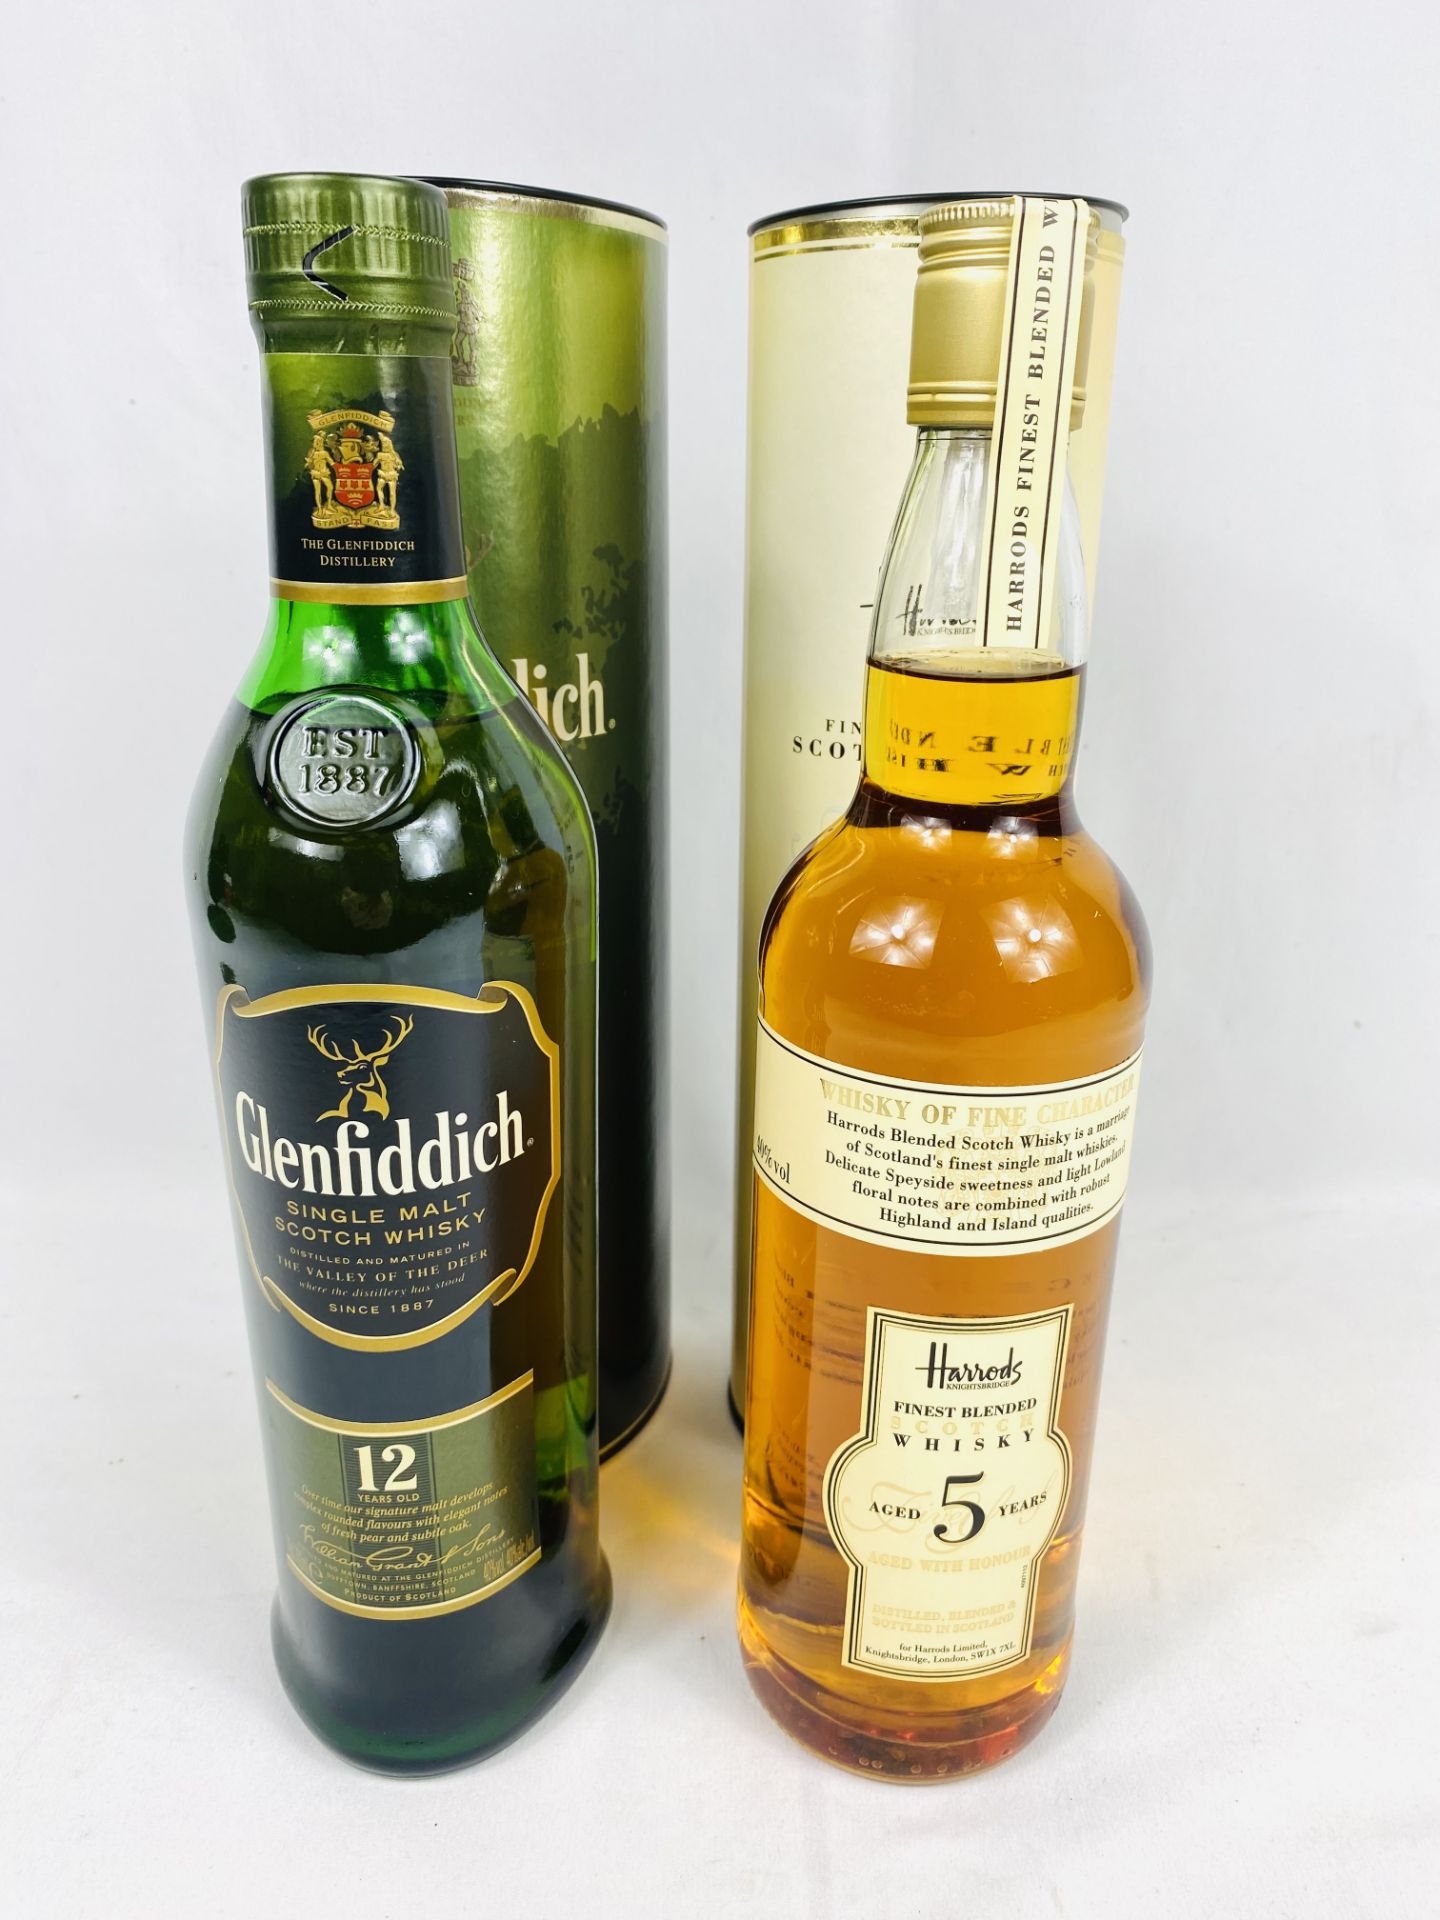 70cl bottle of Glenfiddich Scotch whisky; together with a bottle of Harrods finest blended whisky